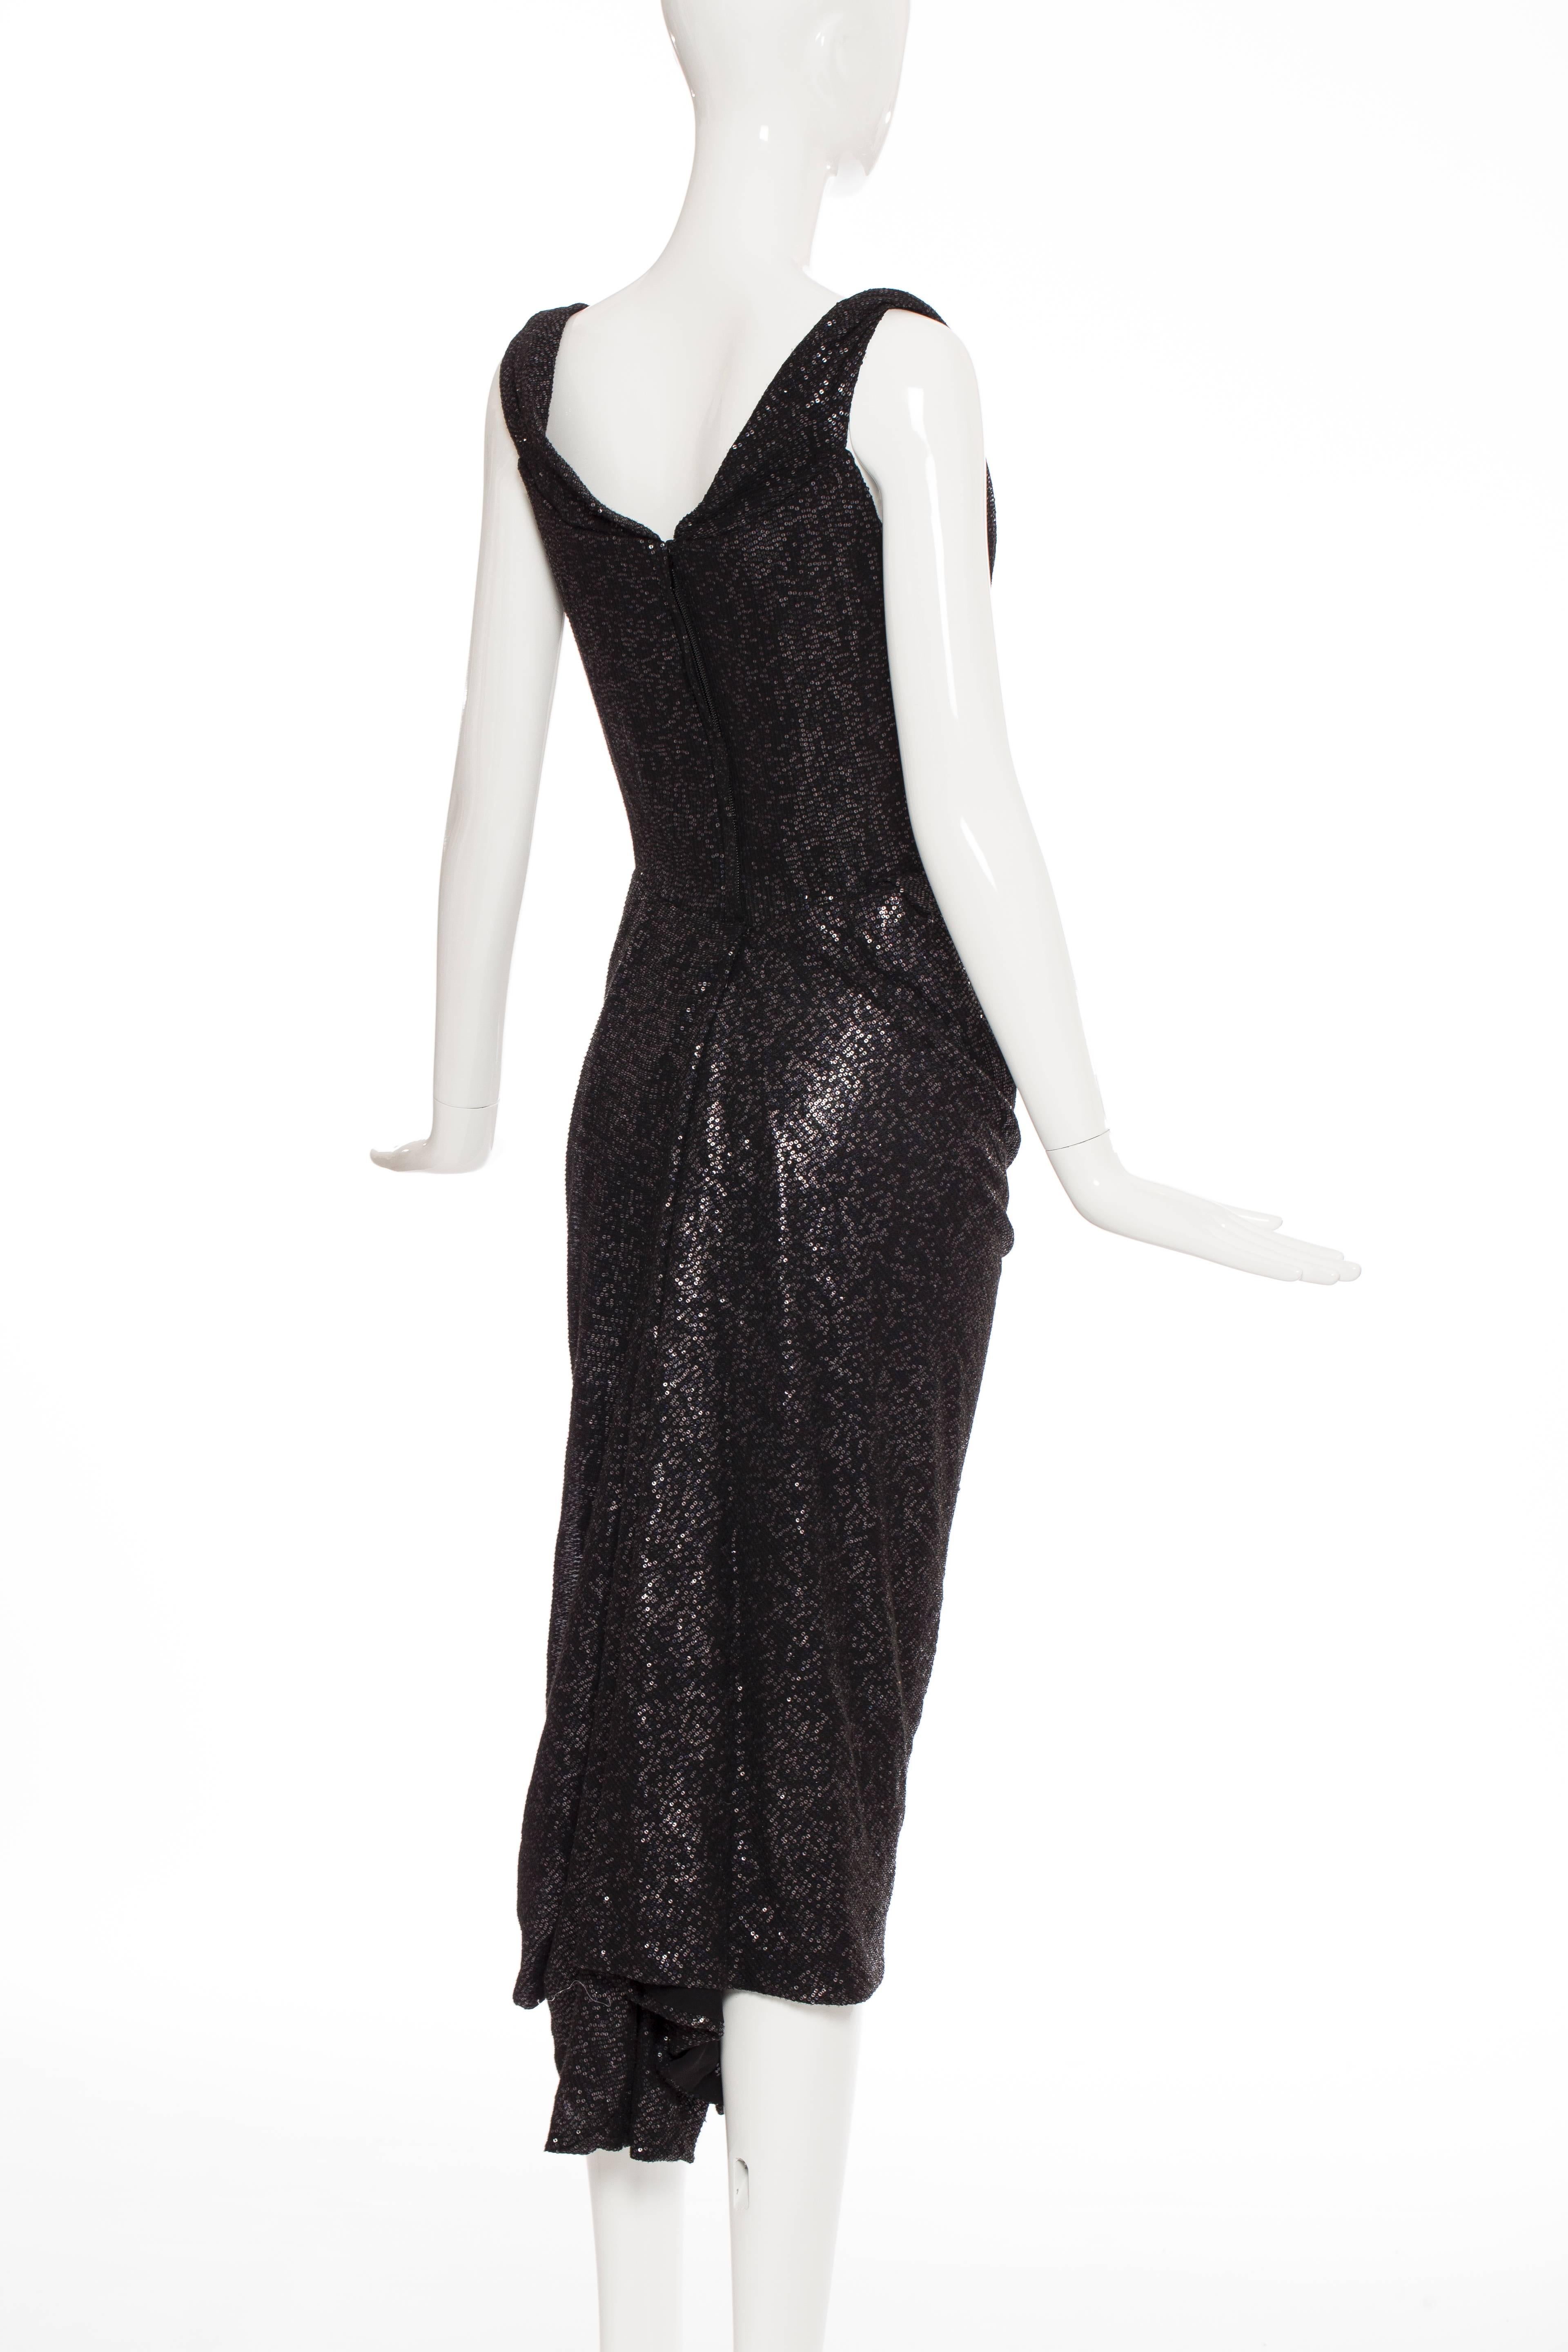 Vivienne Westwood Gold Label Black Sequined Evening Dress, Autumn - Winter 2011 3